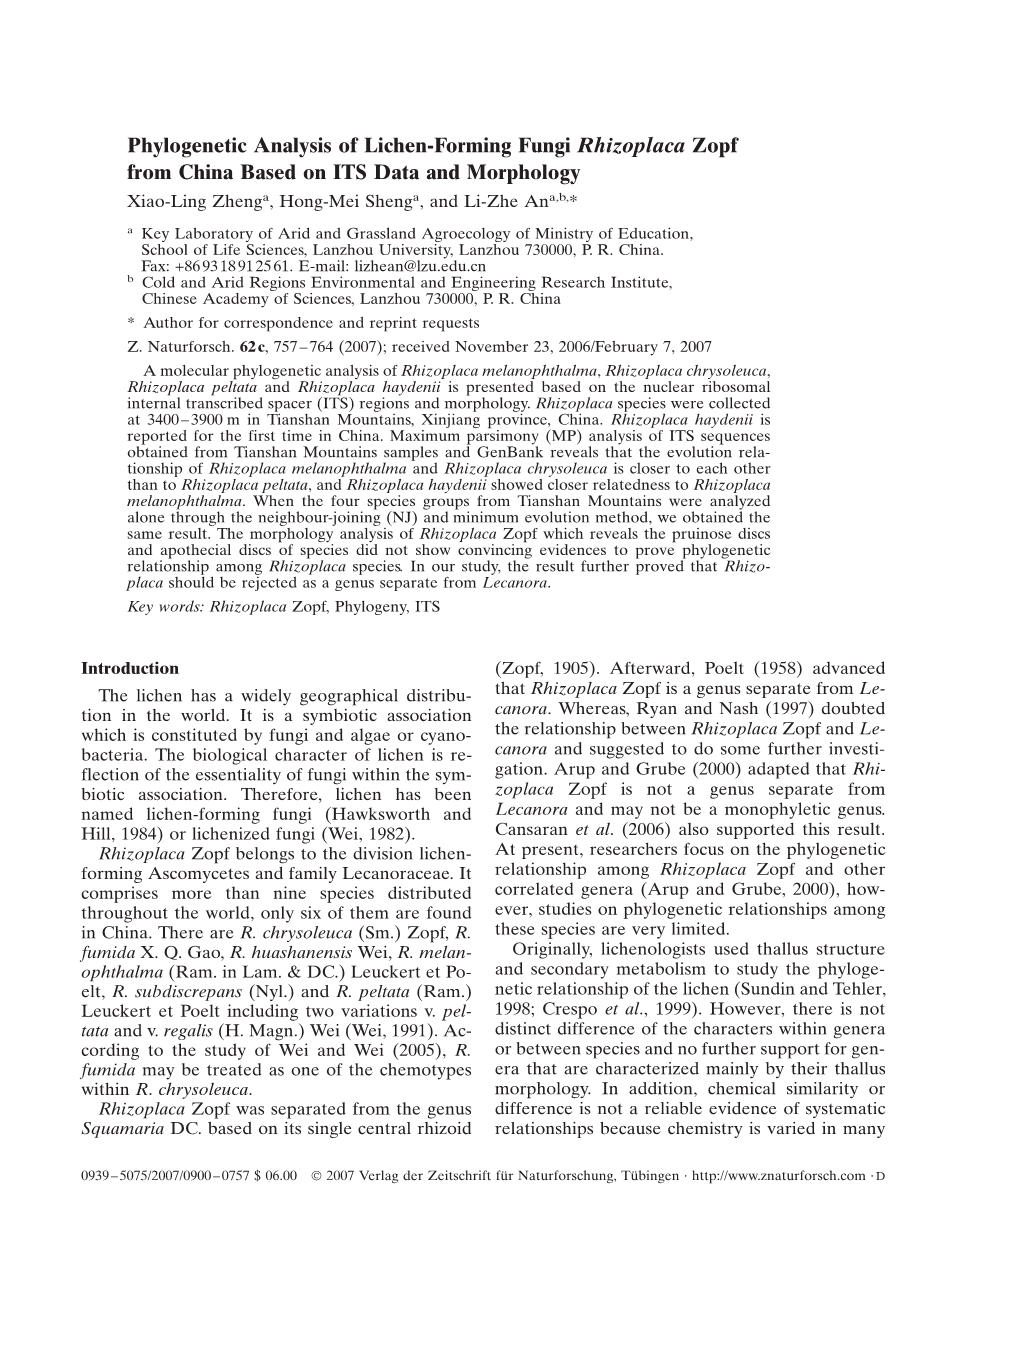 Phylogenetic Analysis of Lichen-Forming Fungi Rhizoplaca Zopf from China Based on ITS Data and Morphology Xiao-Ling Zhenga, Hong-Mei Shenga, and Li-Zhe Ana,B,*